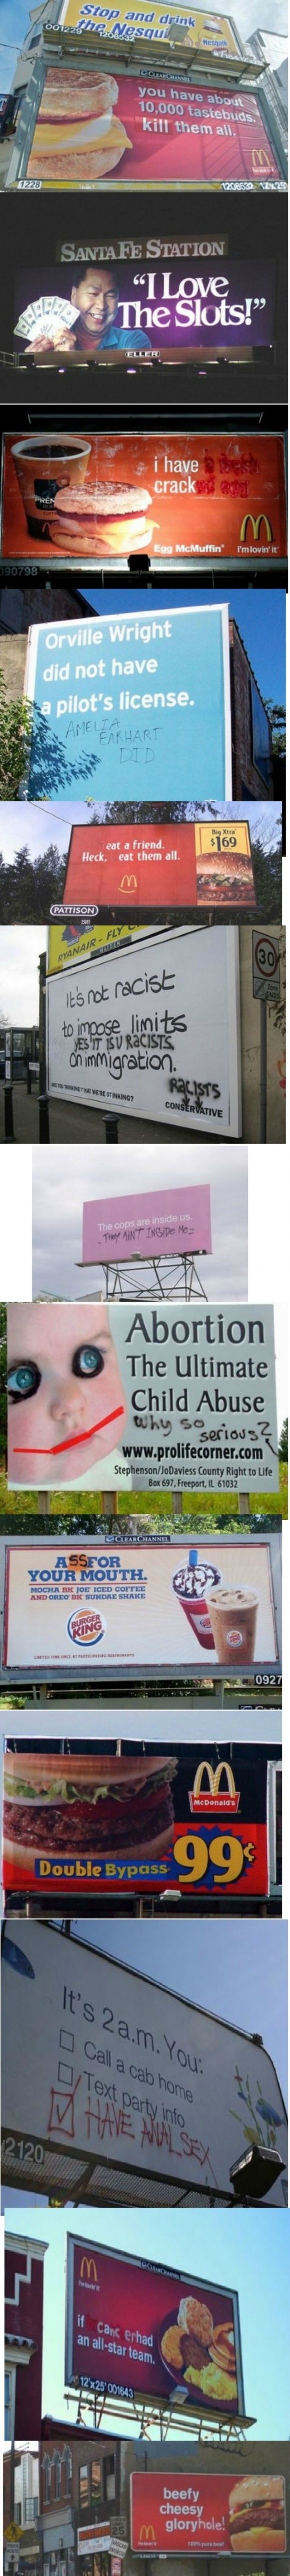 Funny billboard vandalism